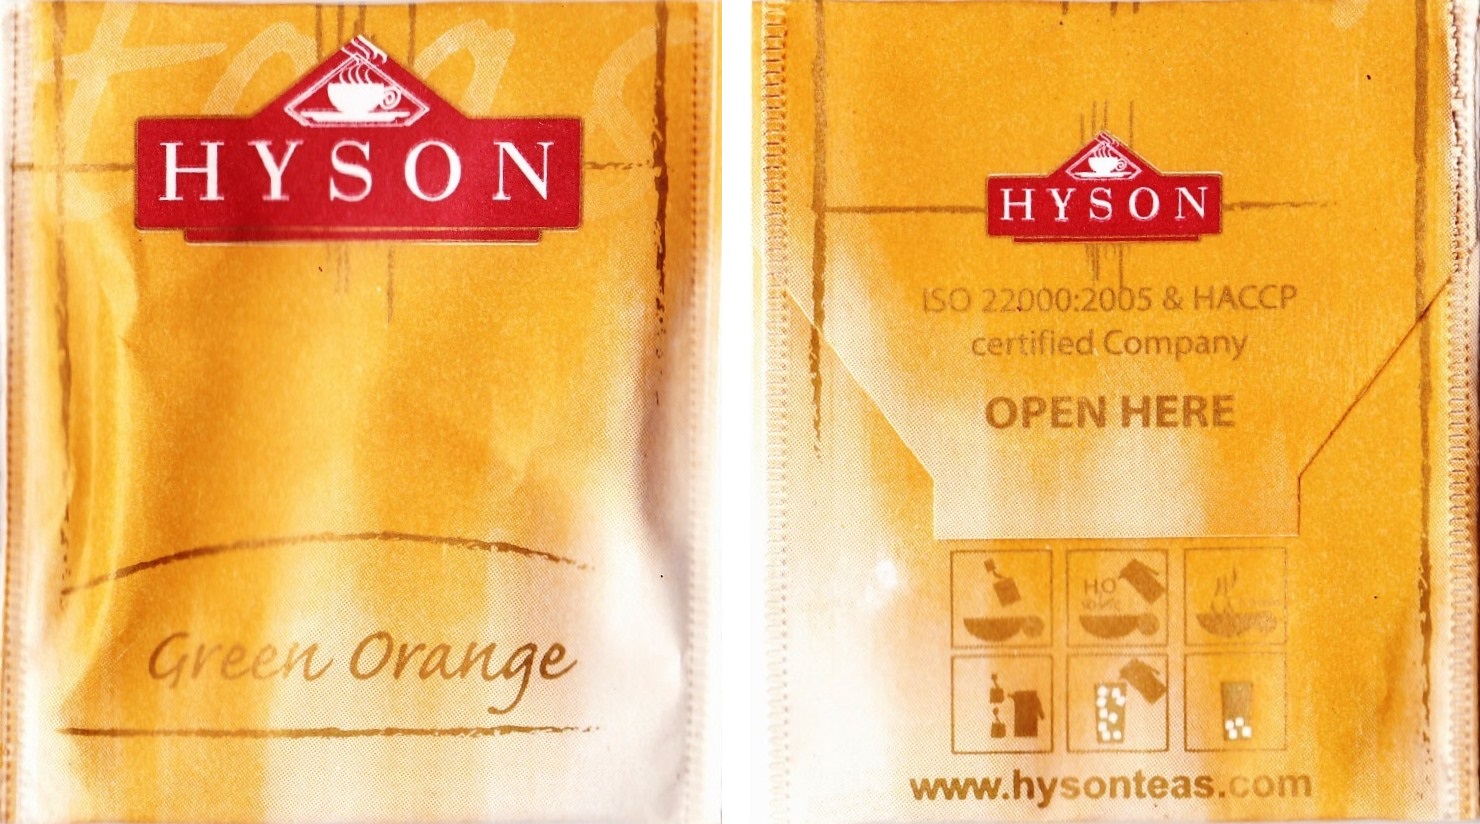 Hyson - Green Orange